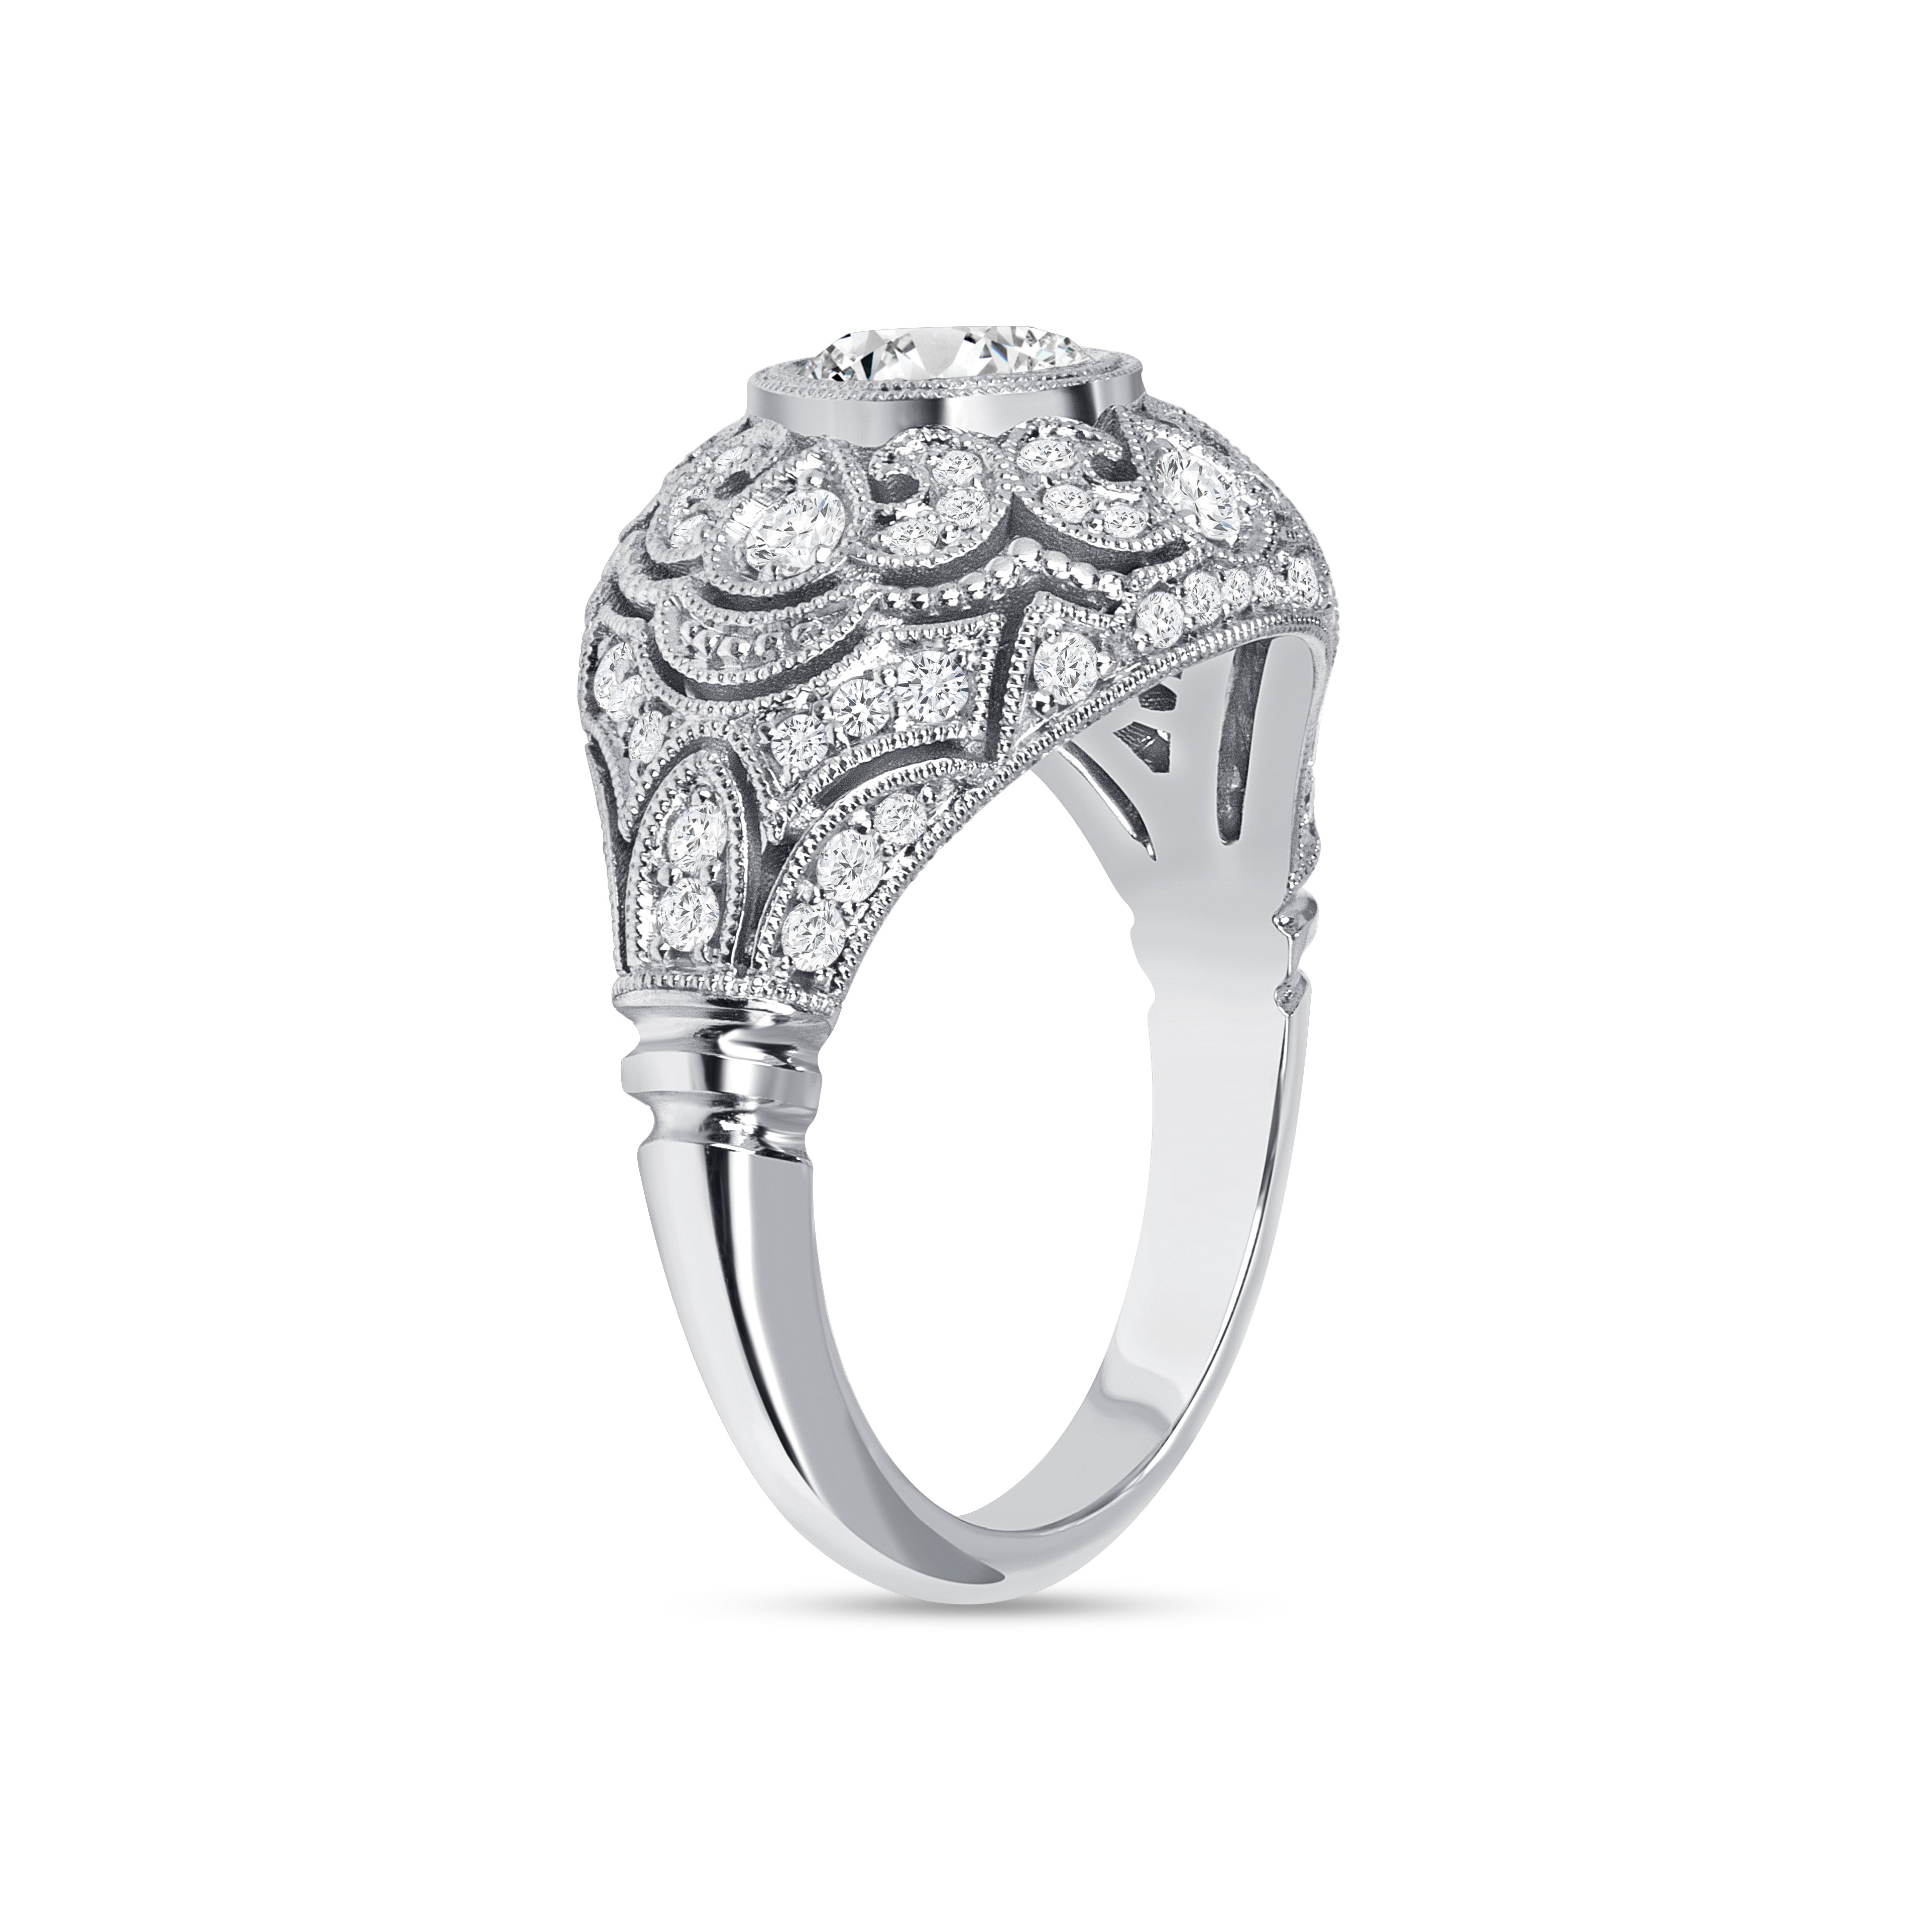 0.78ctw Round Diamond Center Art Deco Ring in 14K White Gold